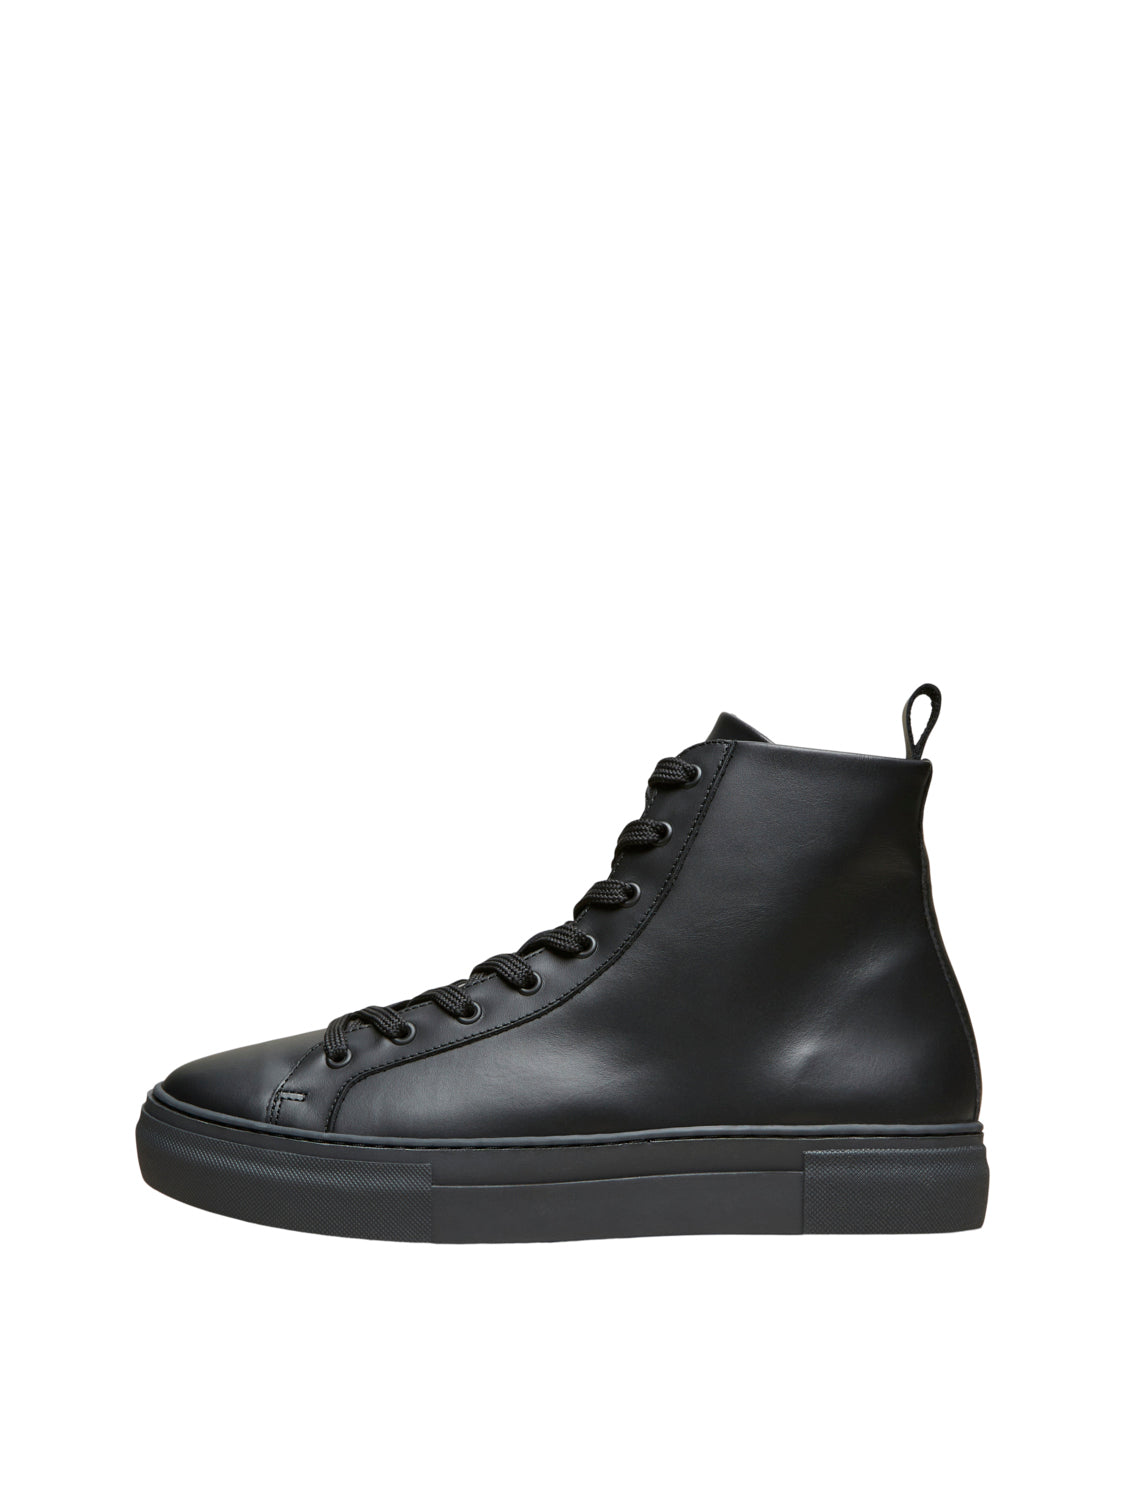 SLHDAVID Shoes - black